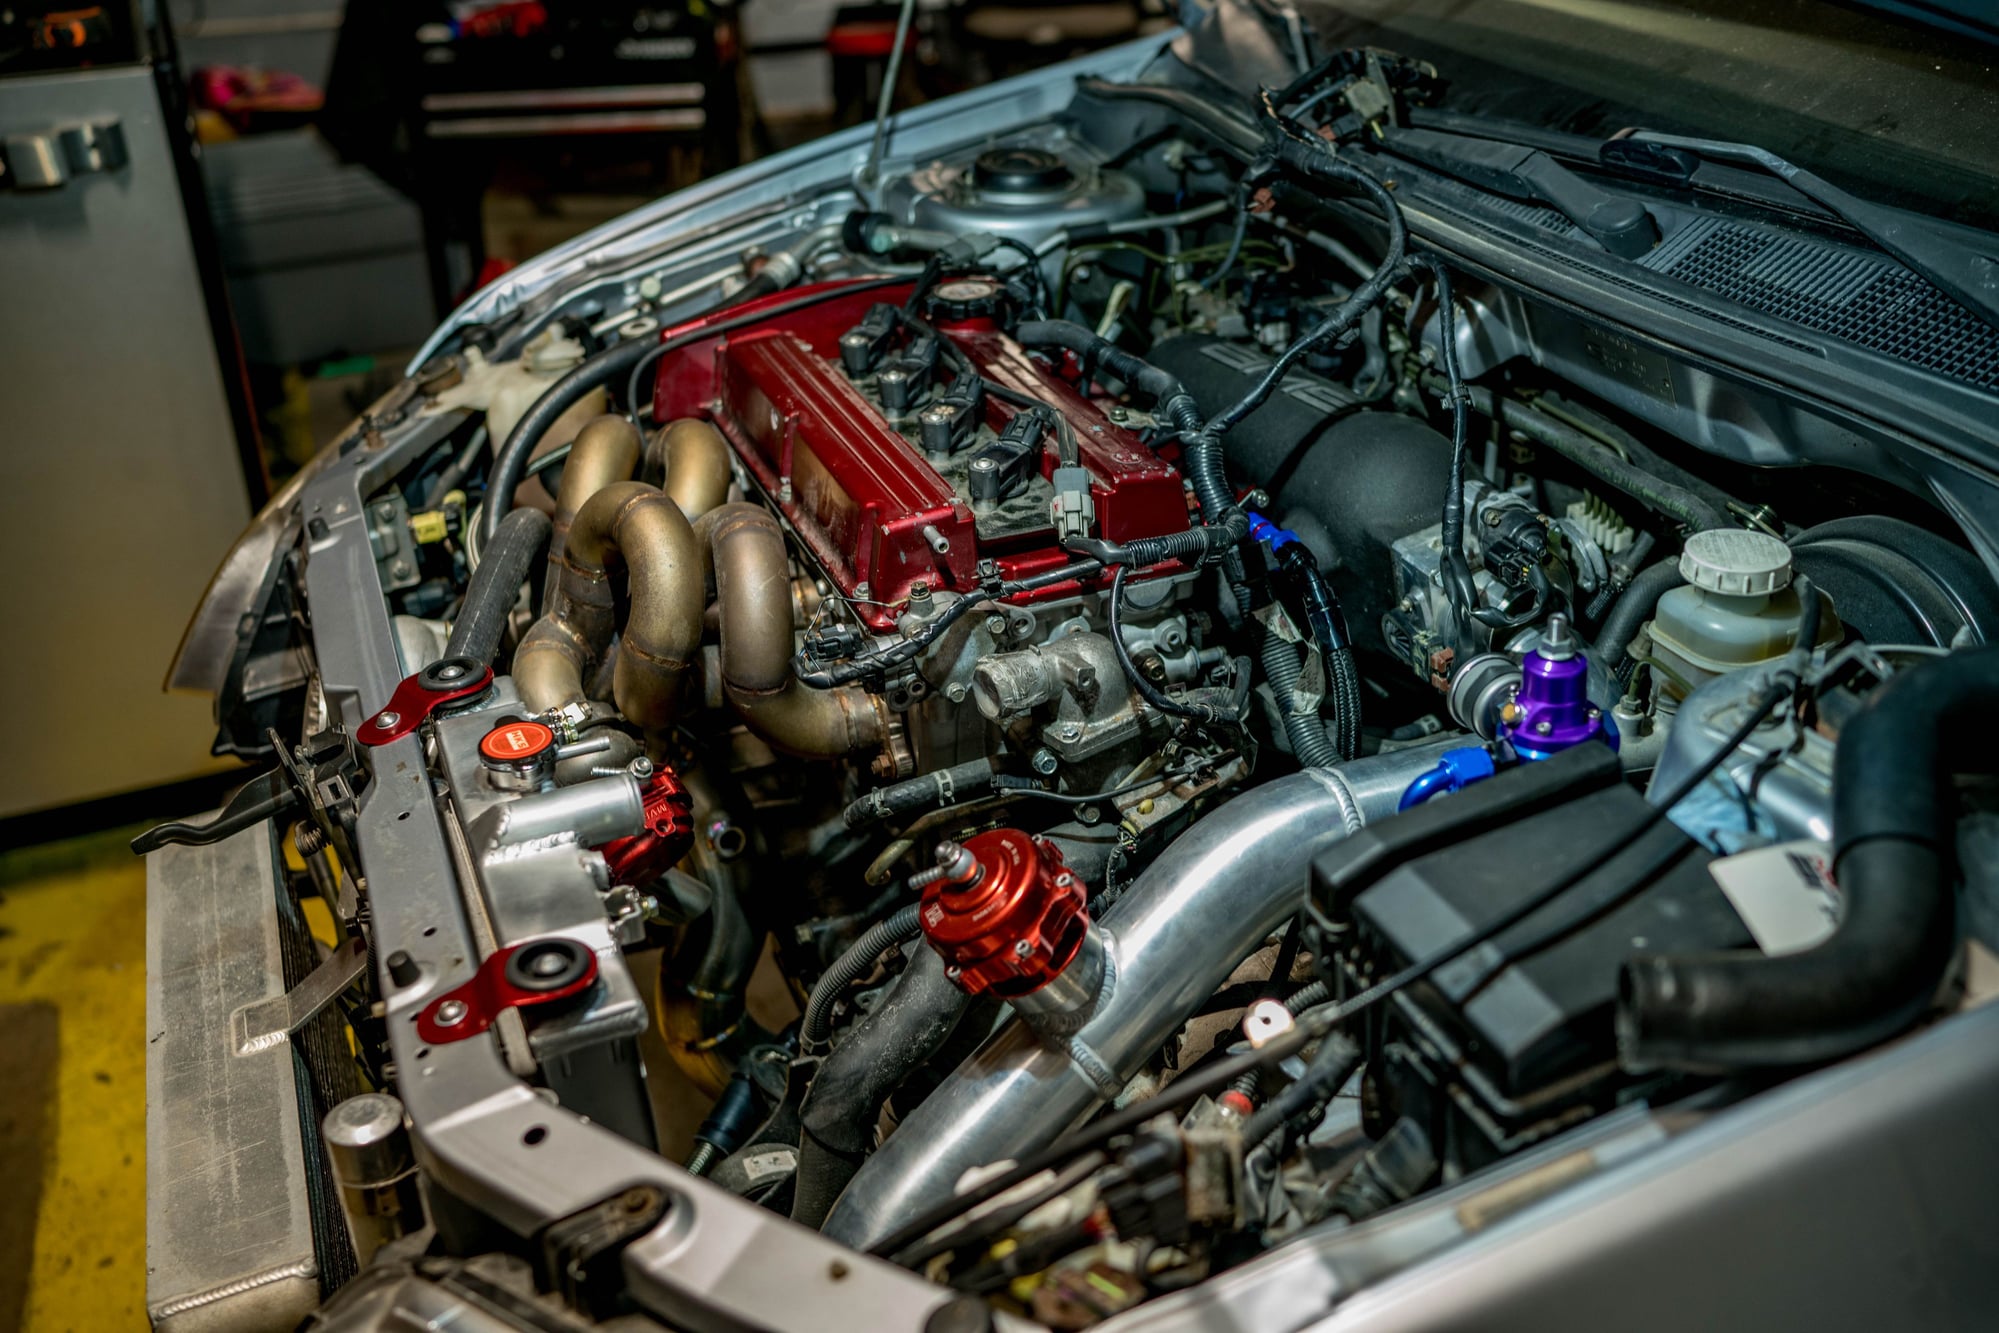 Engine - Power Adders - 6466 turbo kit, kelford 280s, hks,ams - Used - 2003 to 2005 Mitsubishi Lancer Evolution - San Antonio, TX 78221, United States